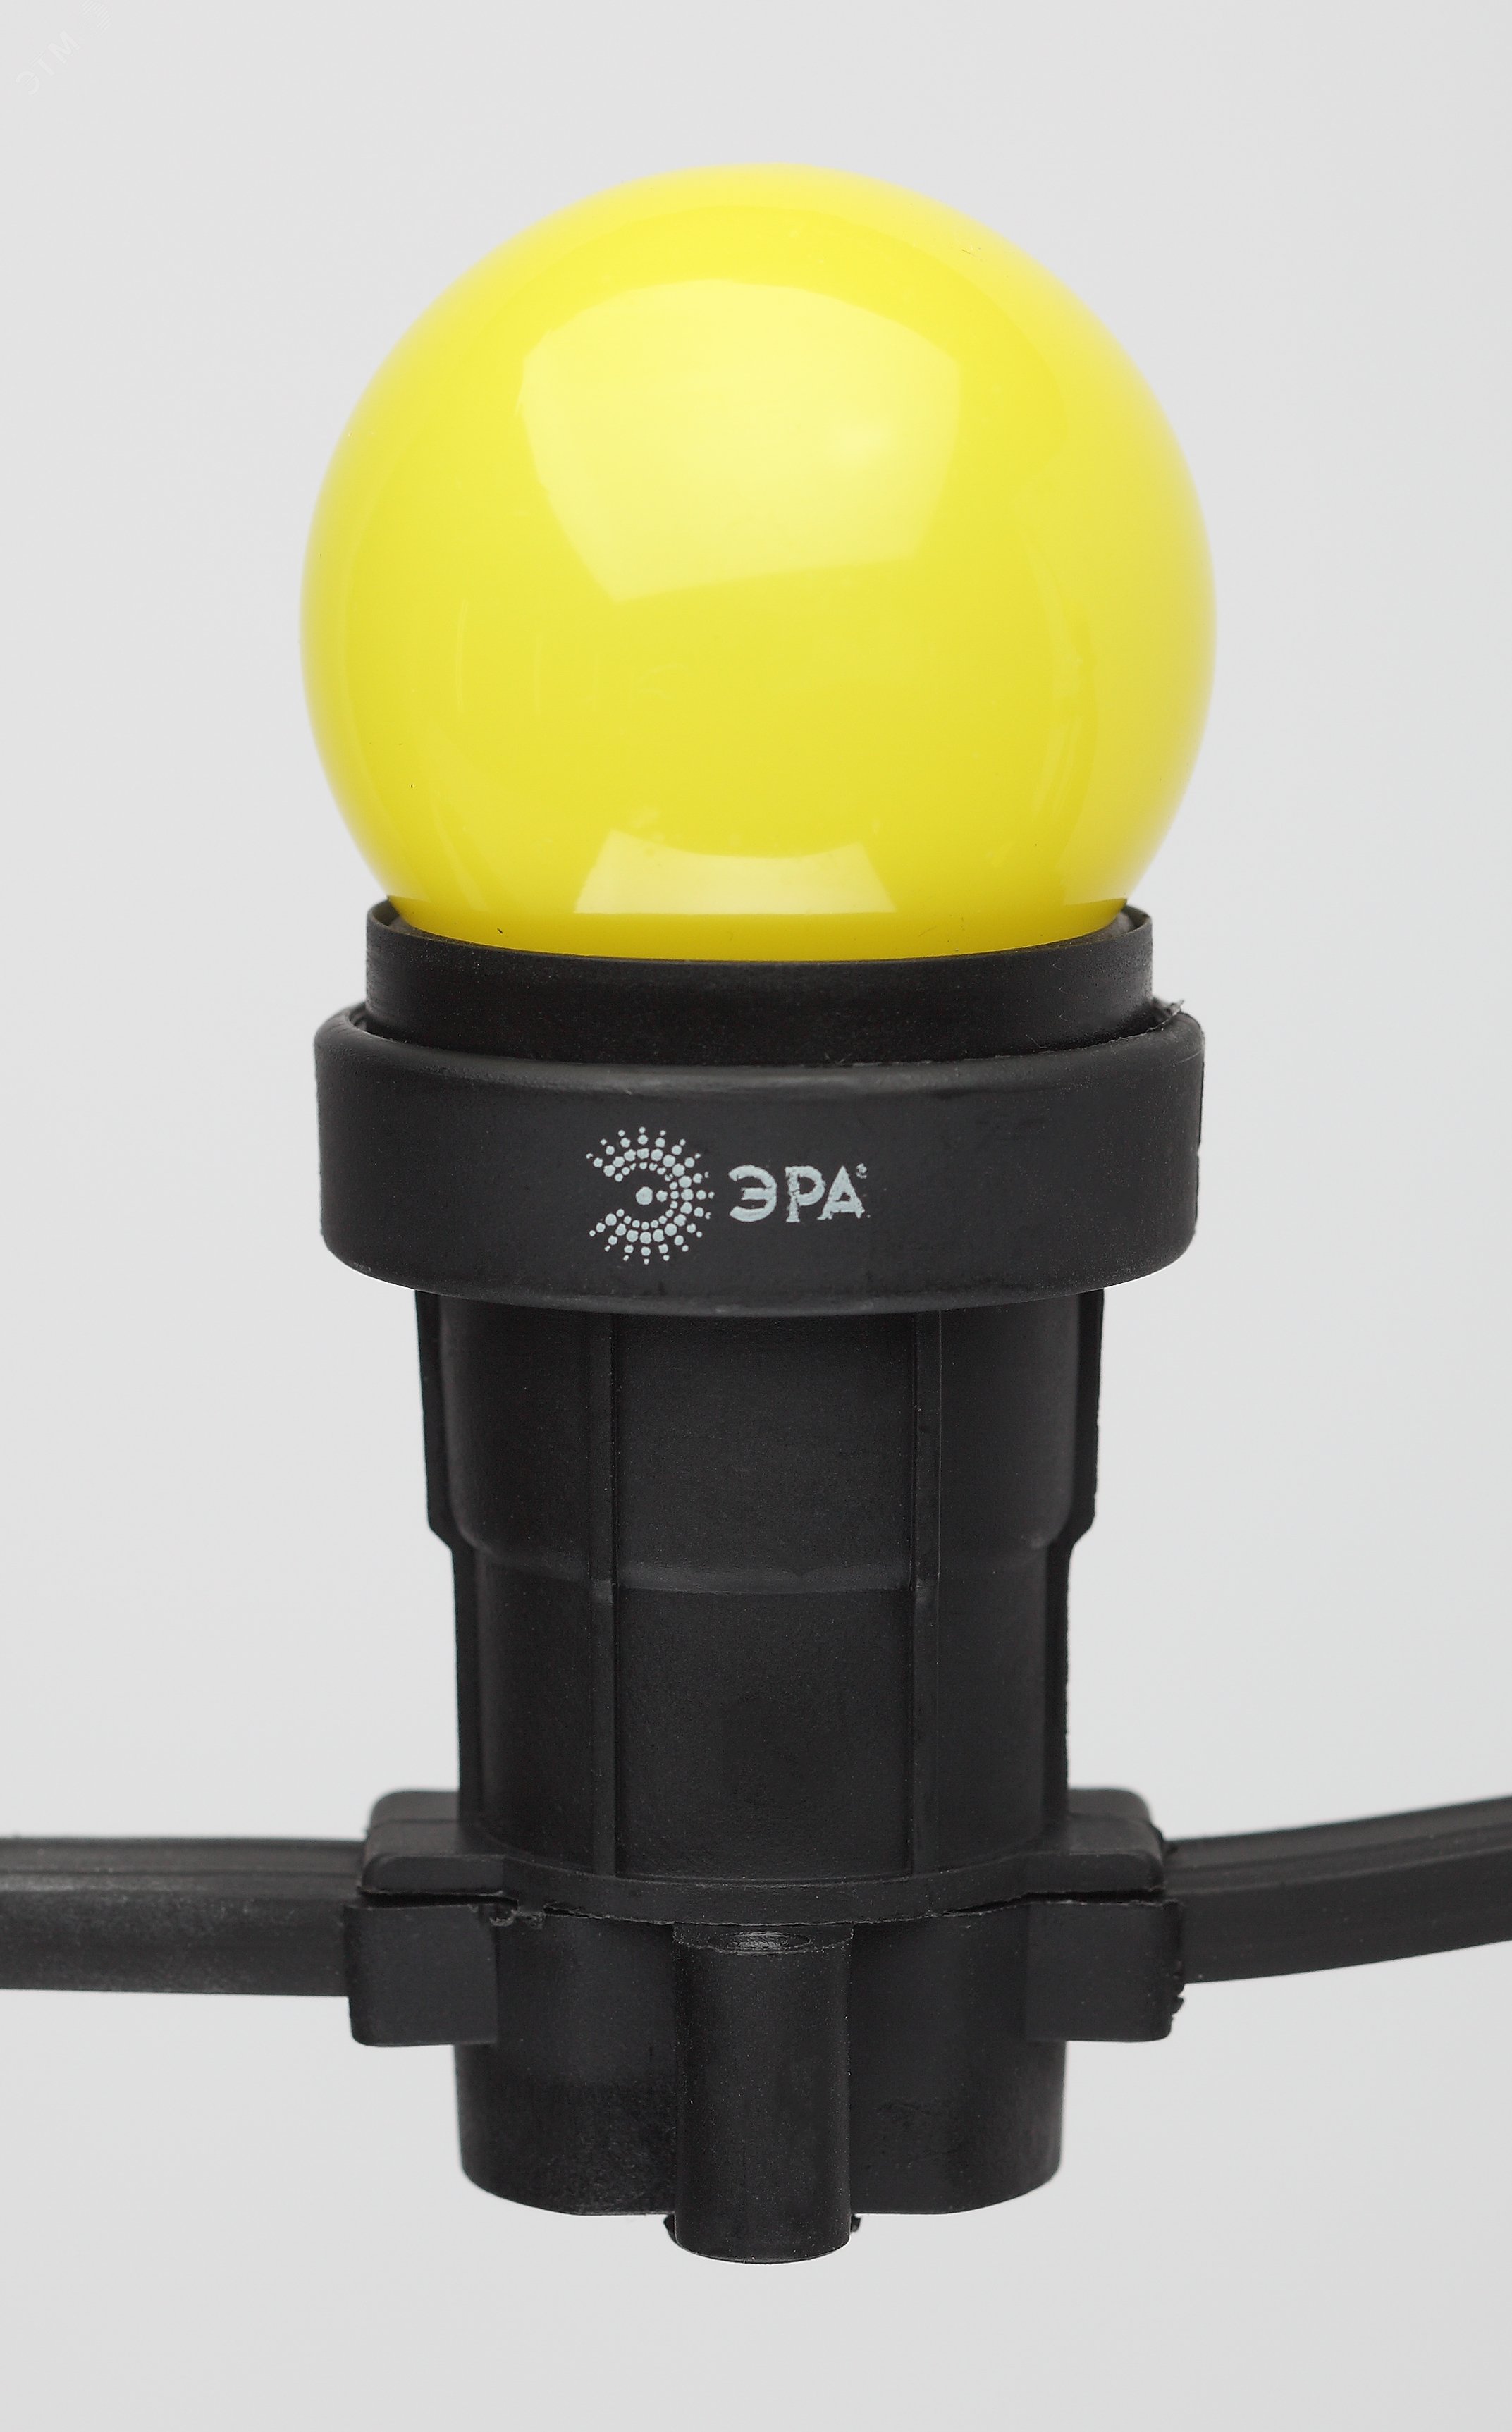 Лампа светодиодная для Белт-Лайт диод. шар, желт., 4SMD, 1W, E27 ERAYL45-E27 LED Р45-1W-E27 Б0049576 ЭРА - превью 4